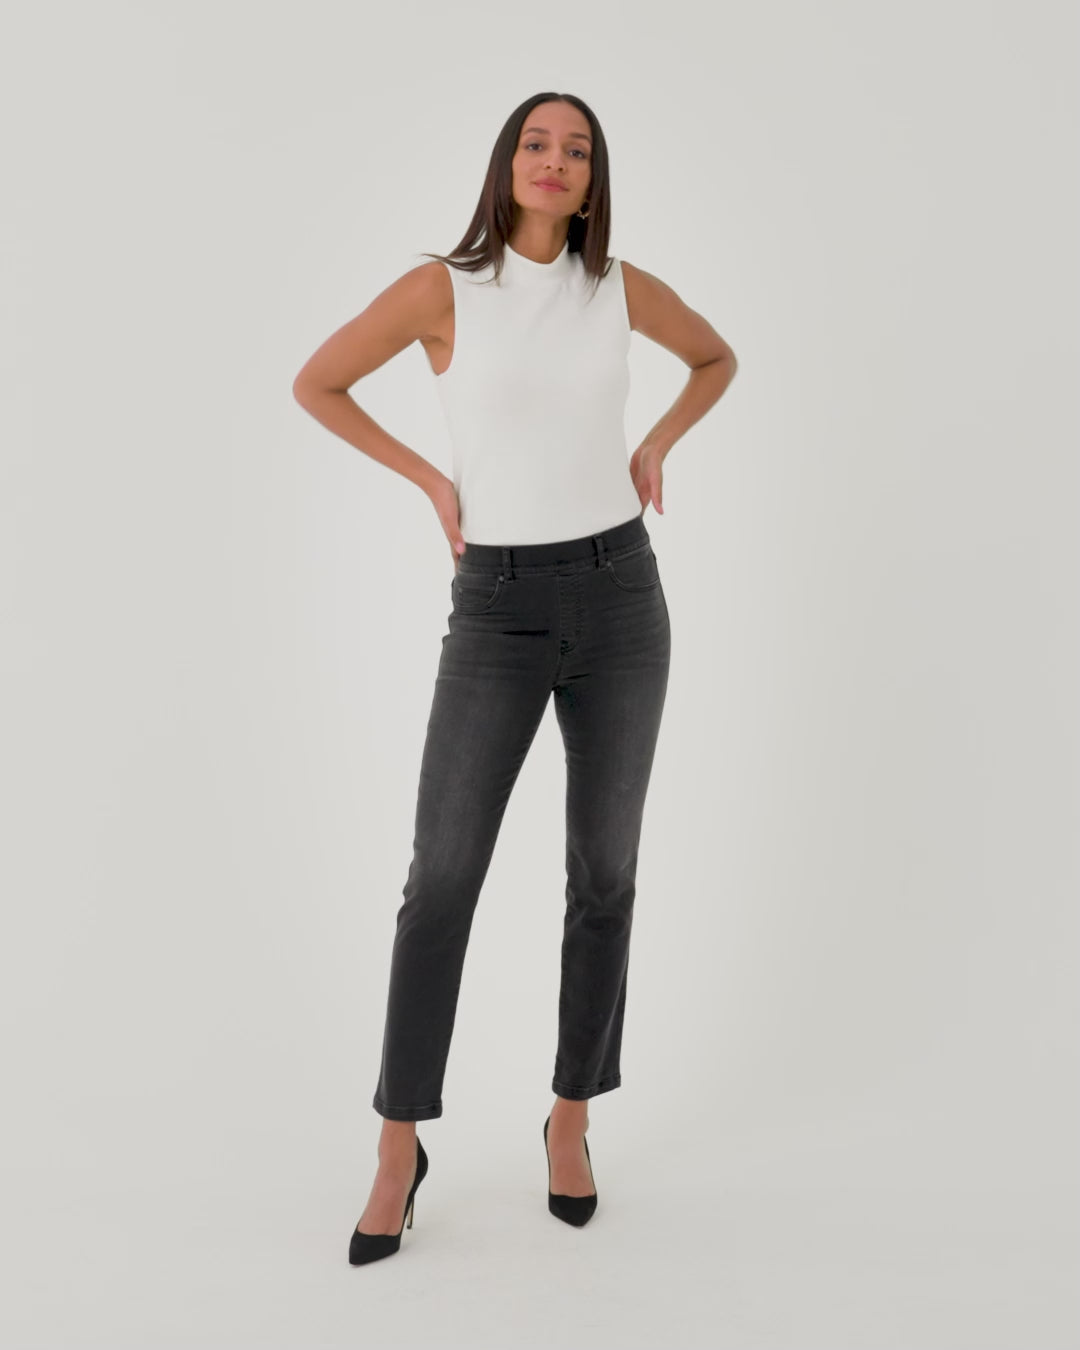 BNWT] Spanx Straight Leg Jeans in Vintage Black for Postpartum